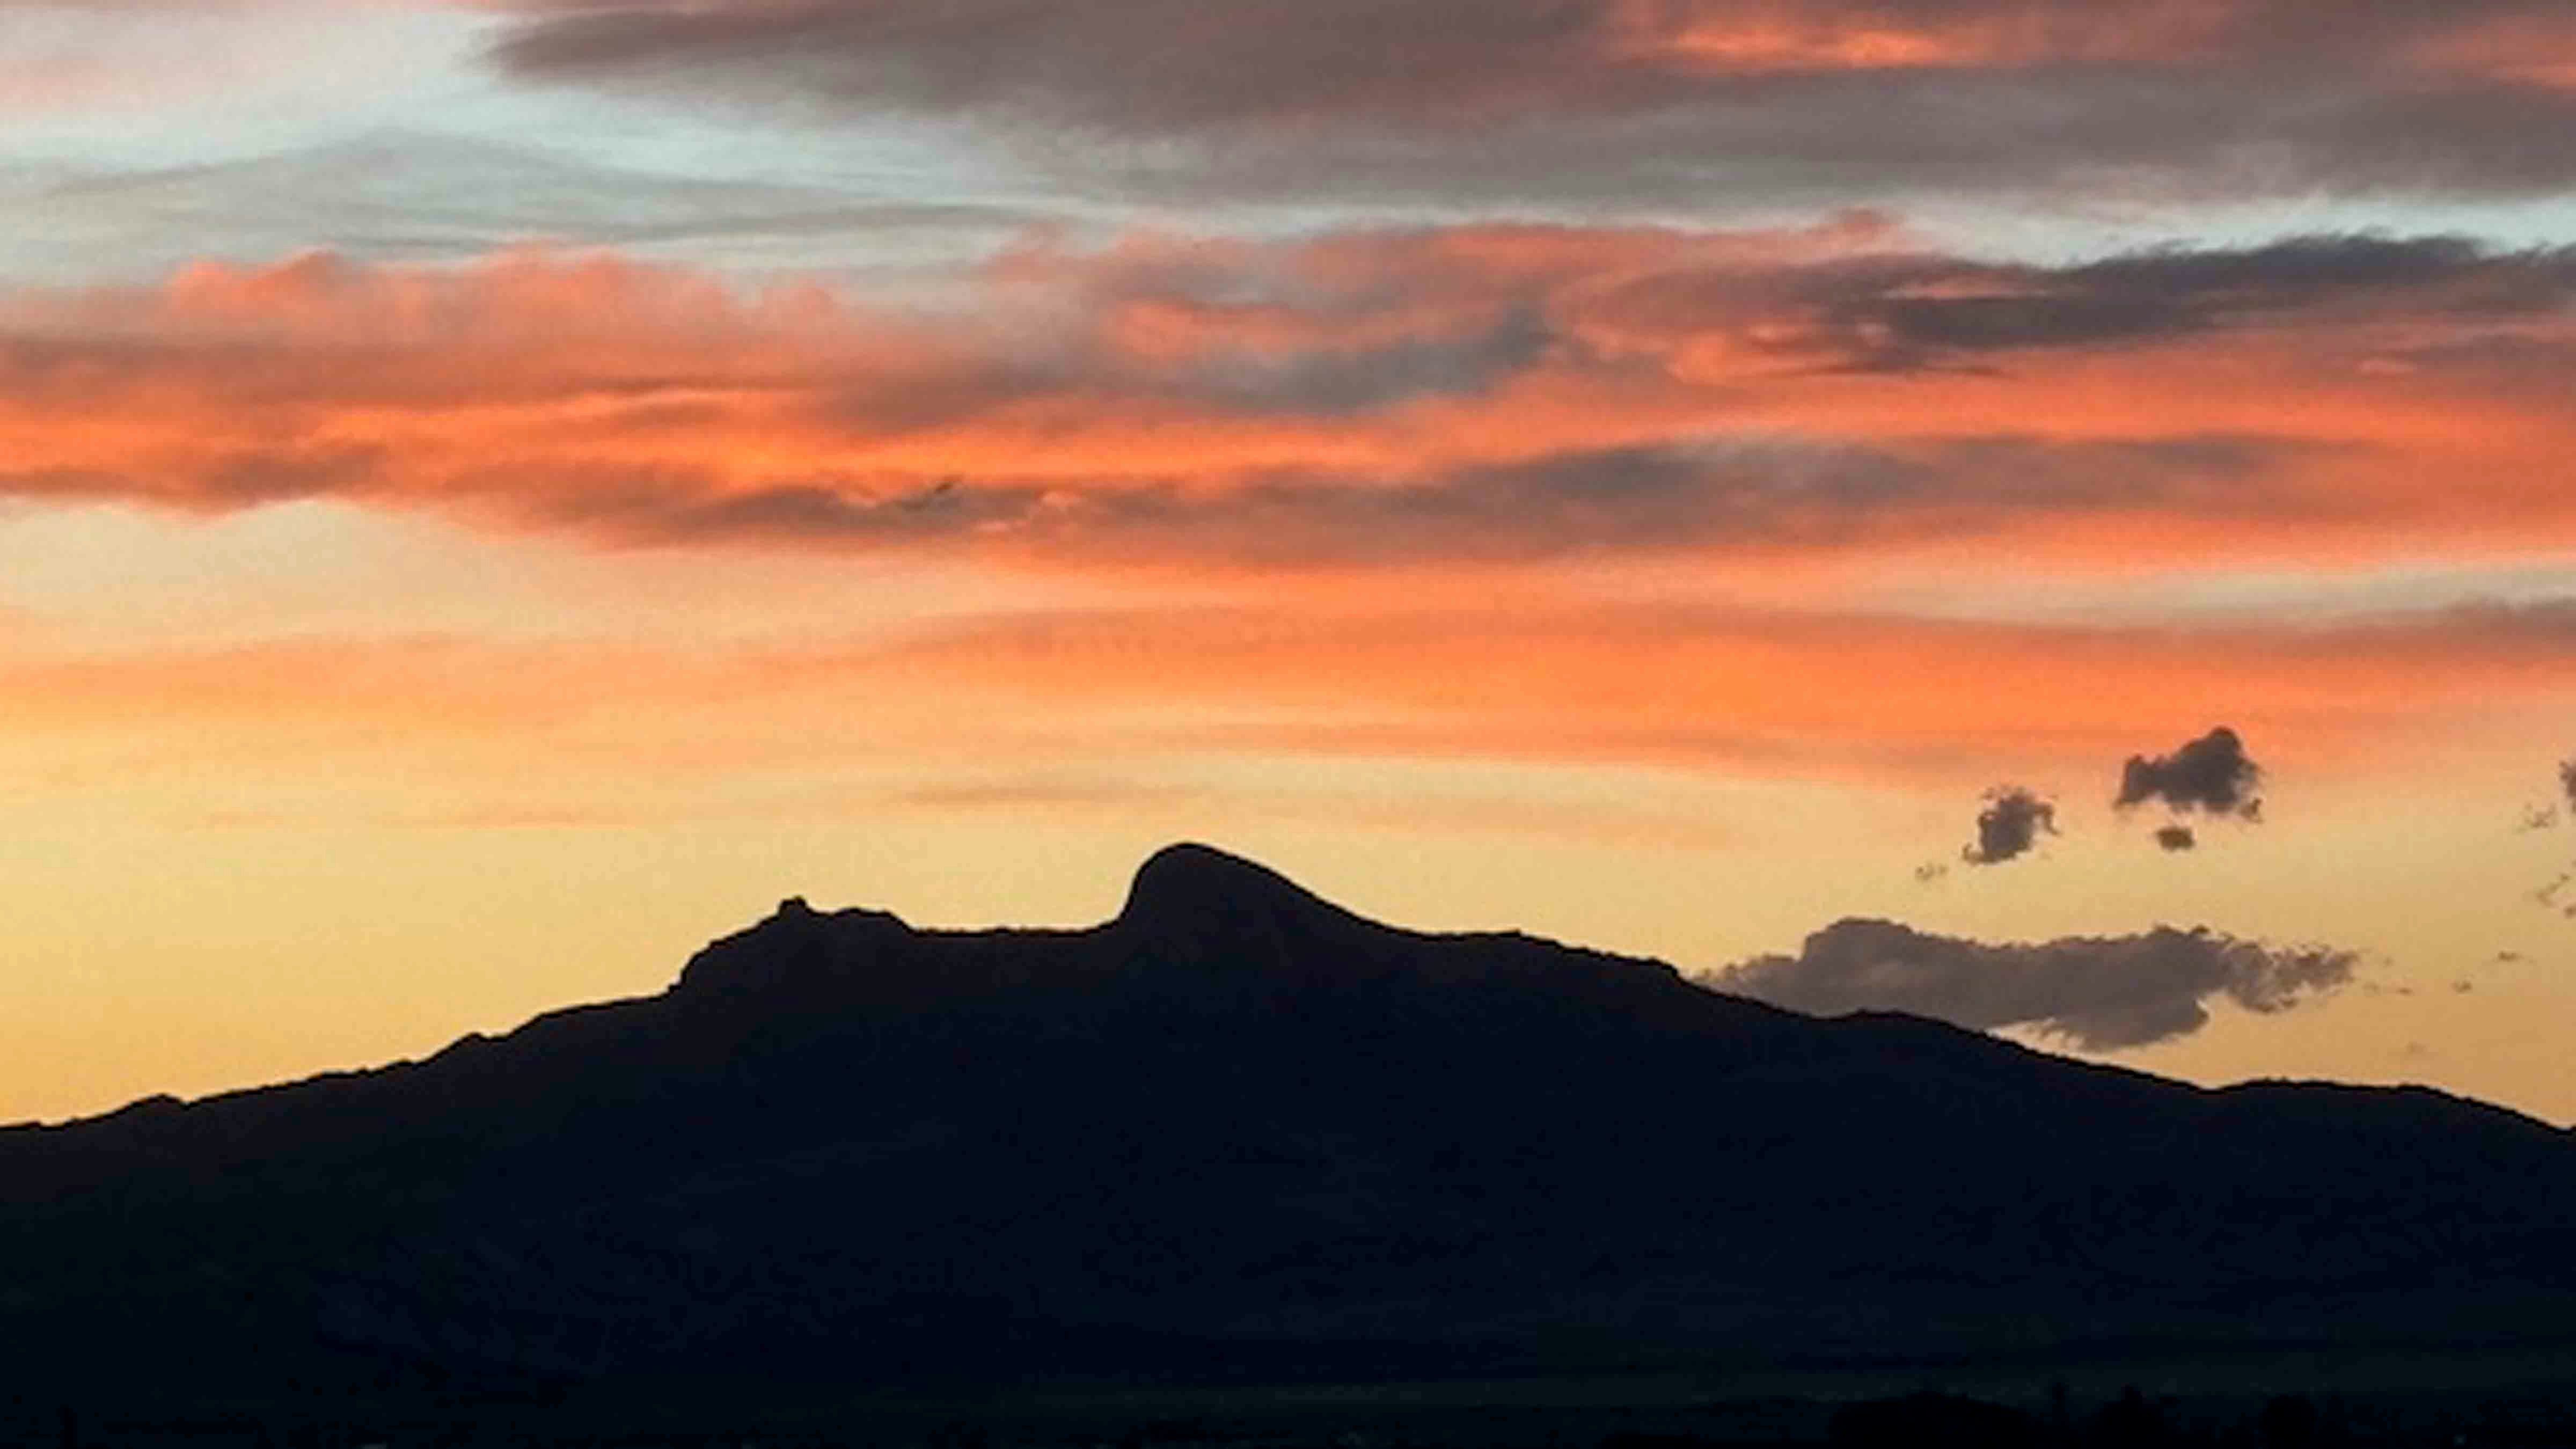 "Saturday night sunset behind Heart Mountain in Cody."